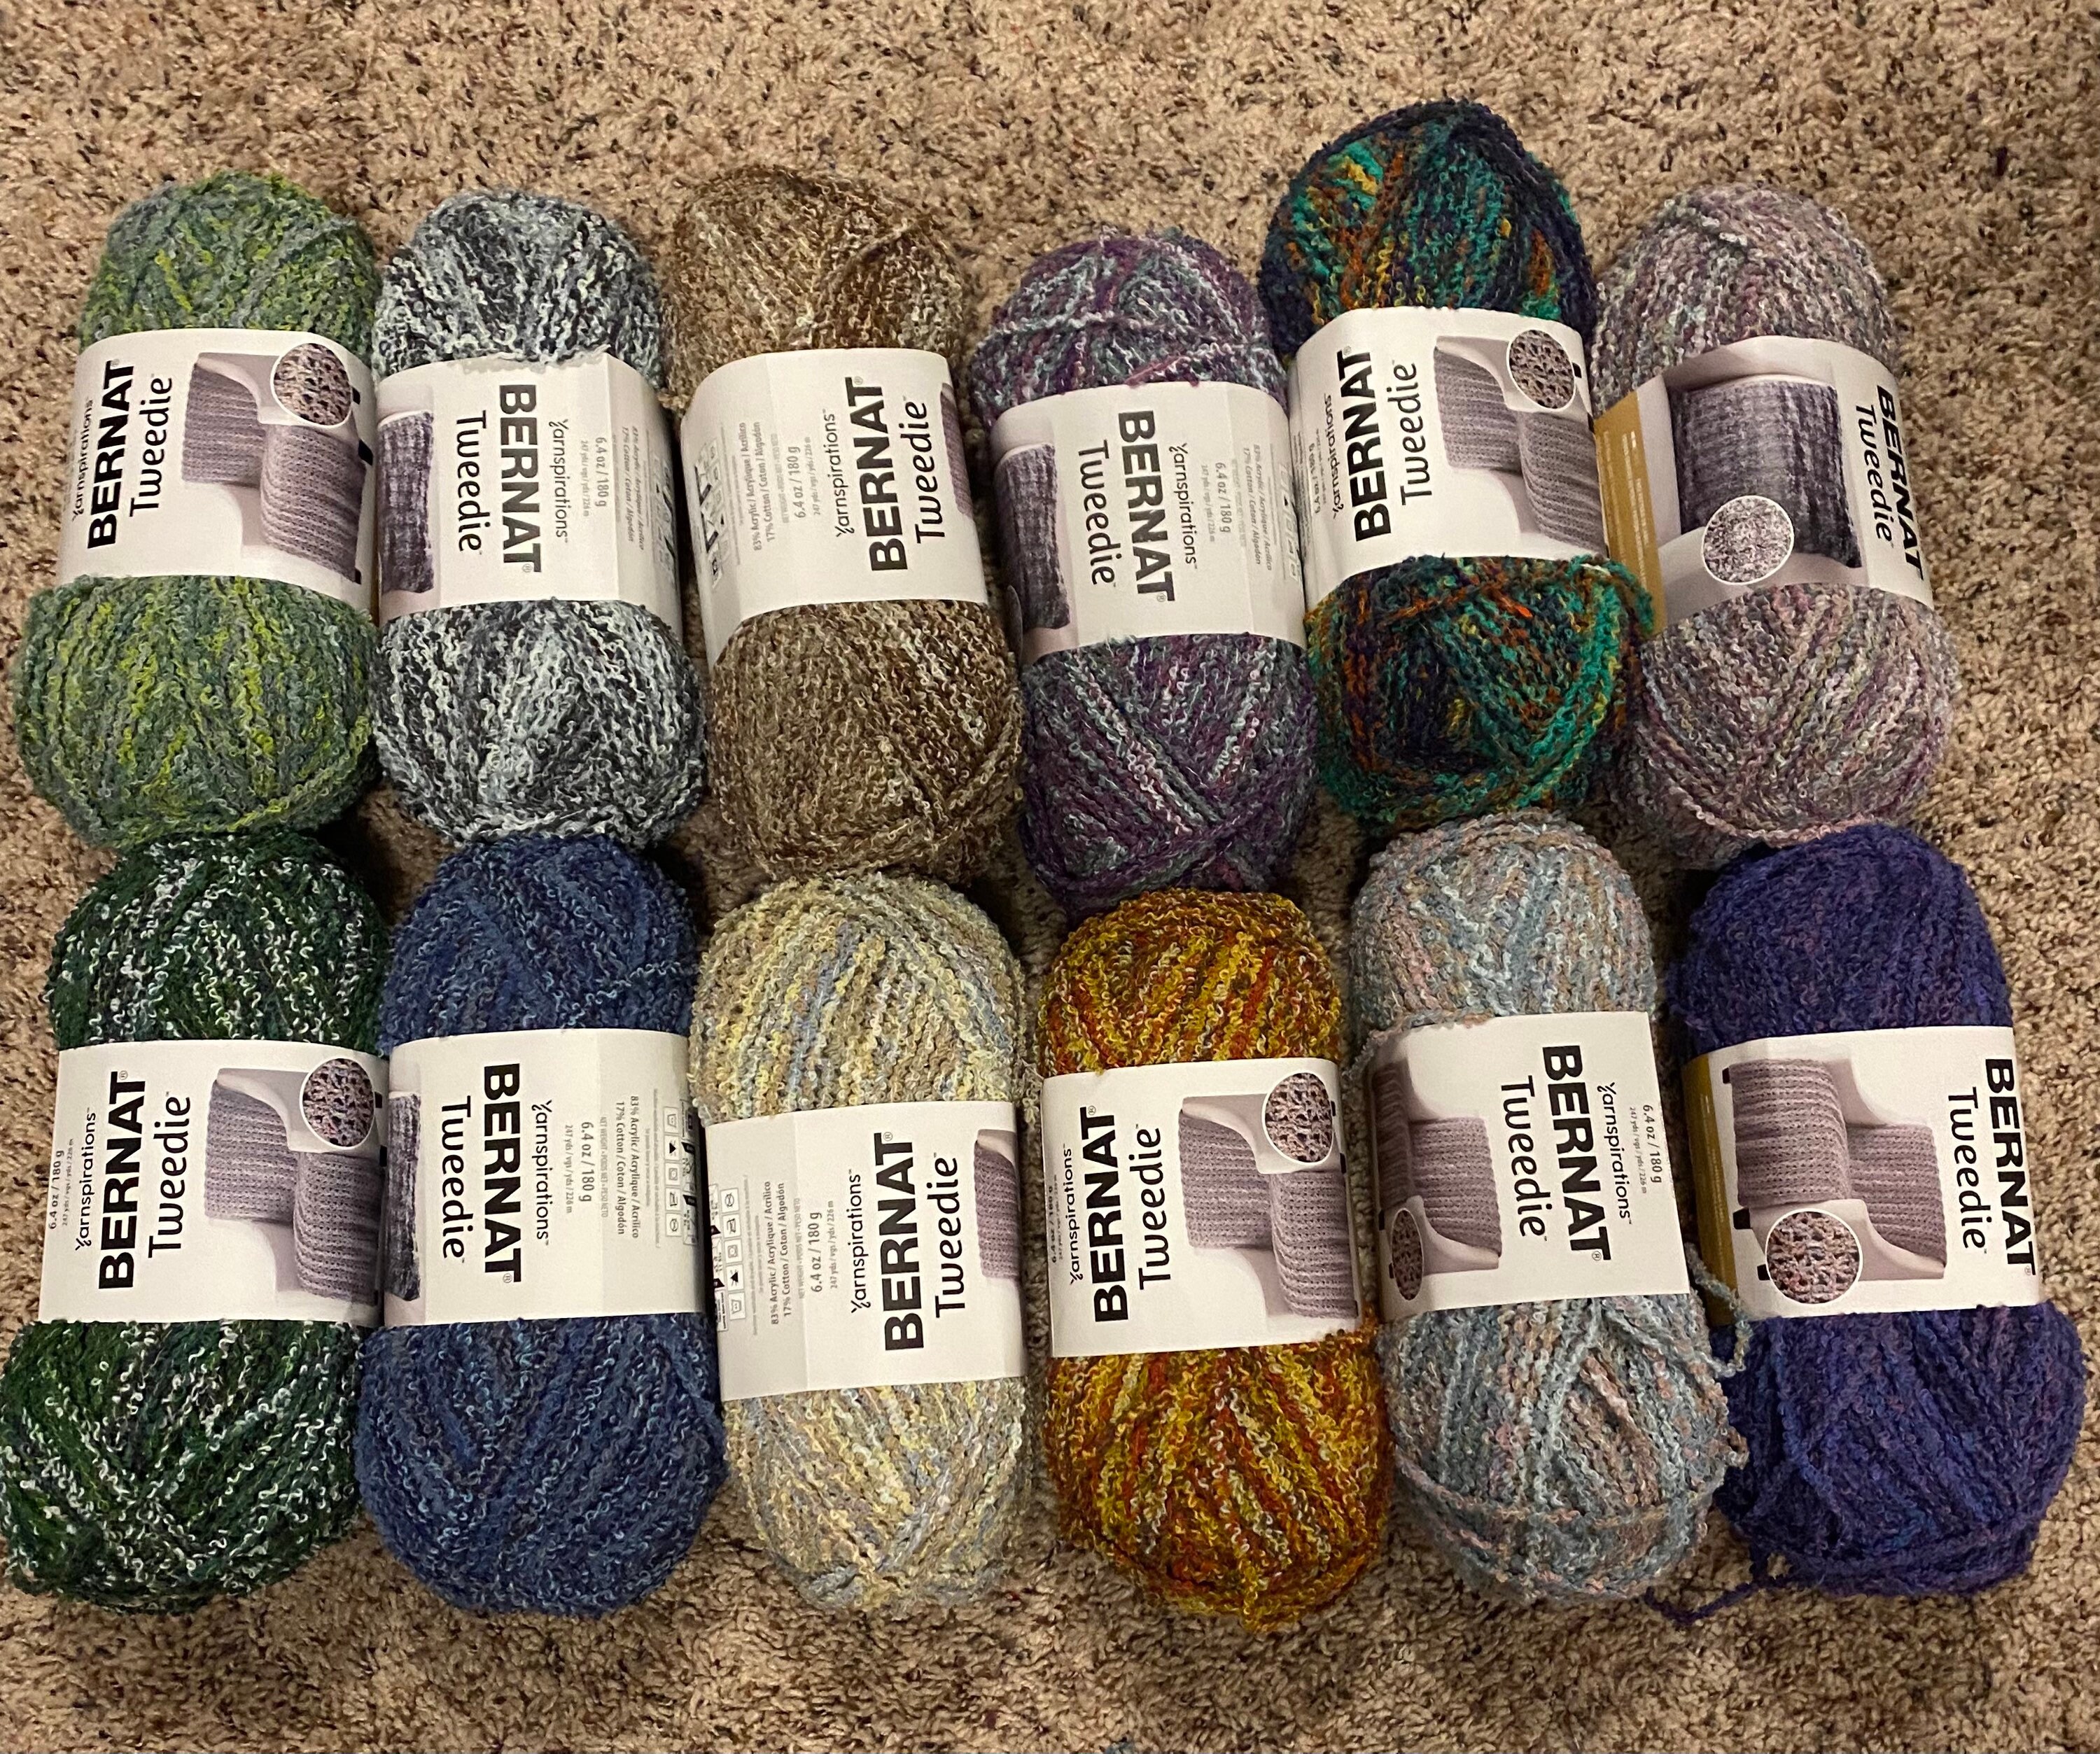 120g Chestnut CHUNKY Yarn for Knitting & Crochet